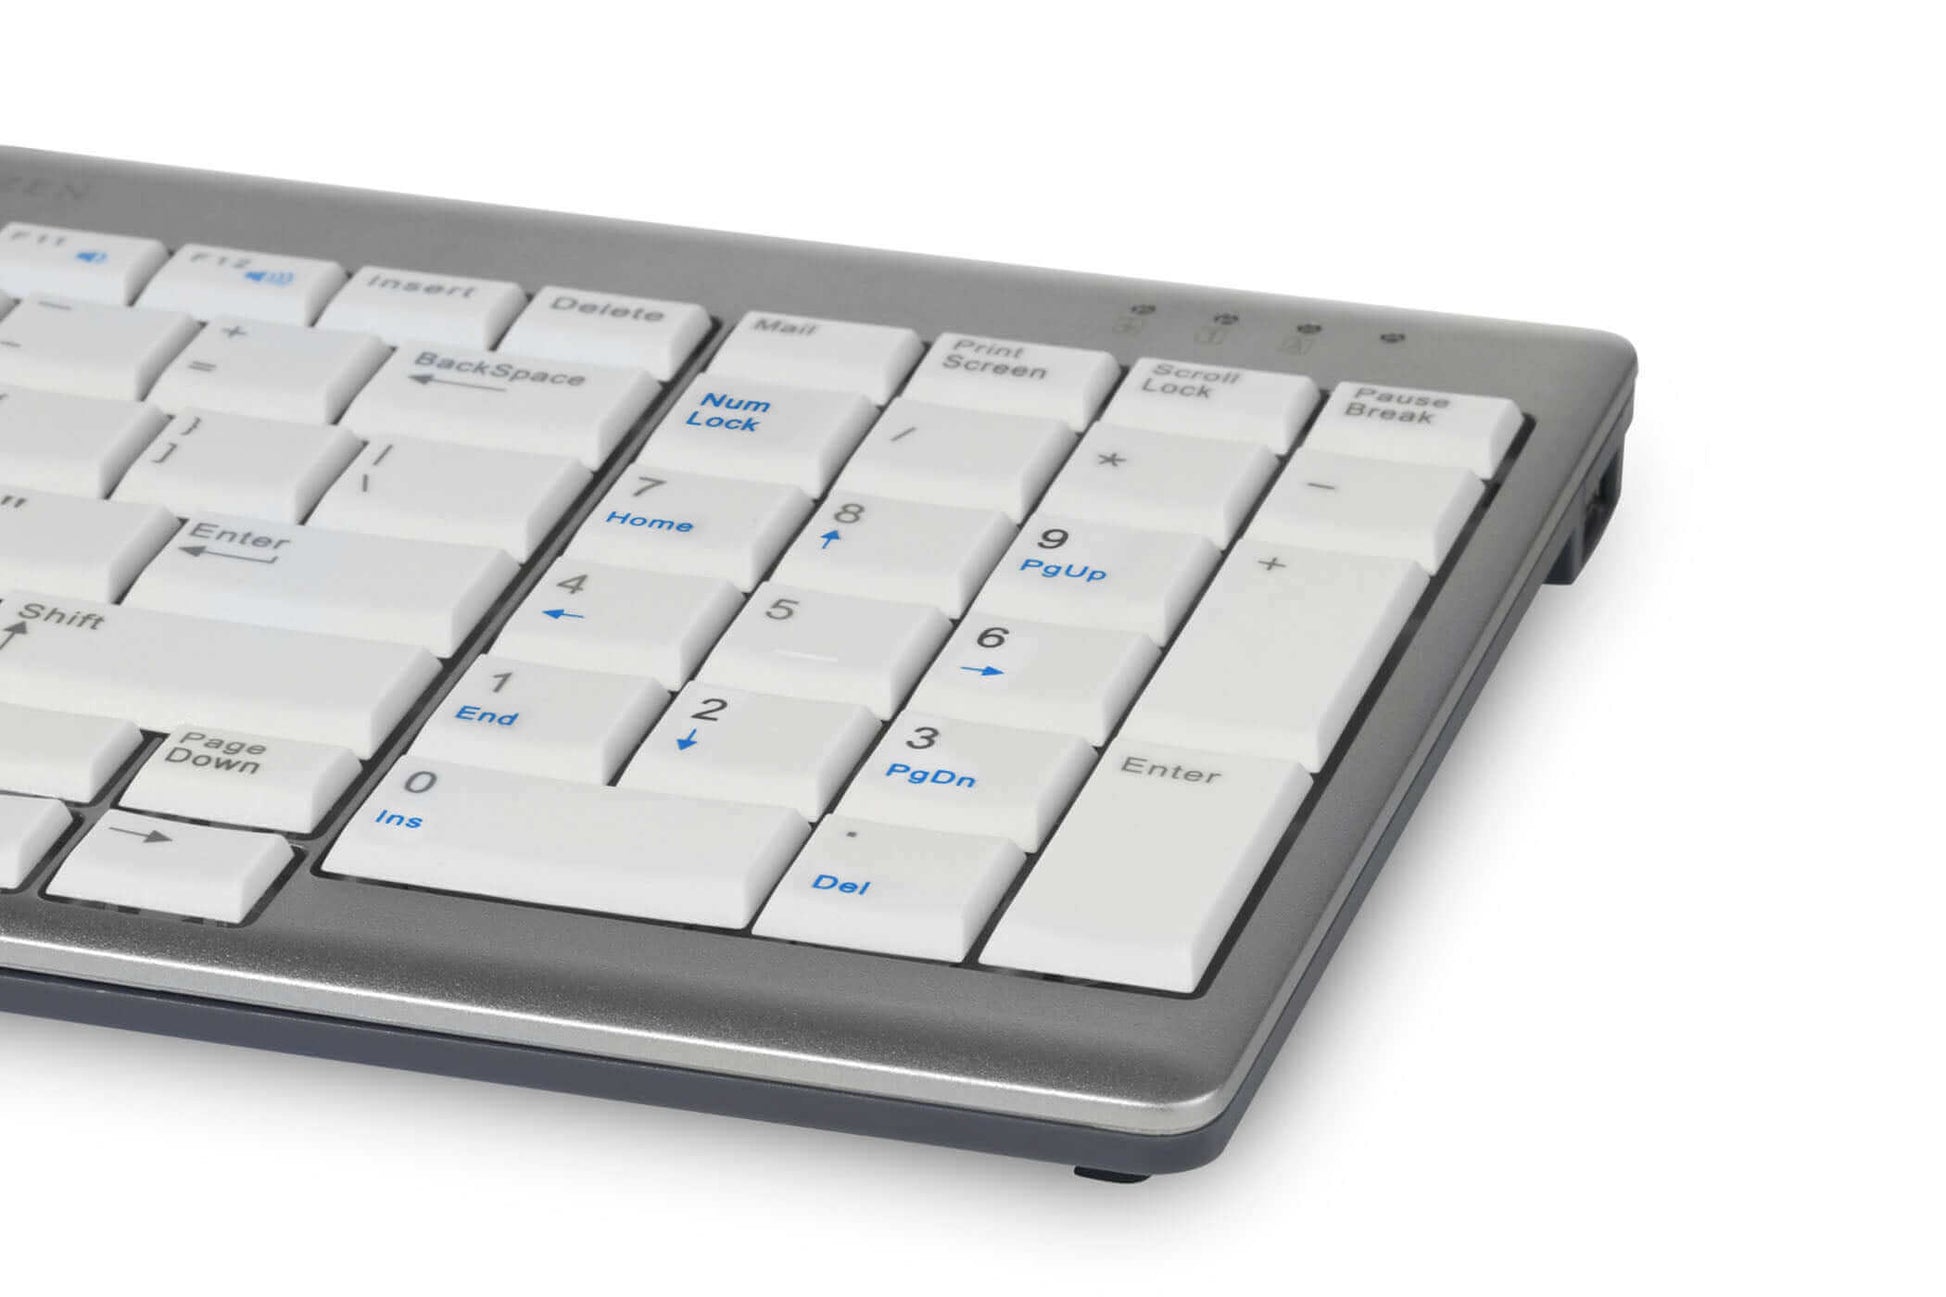 BakkerElkhuizen Tastatur UltraBoard 960 Standard Compact - Bürowelten.eu